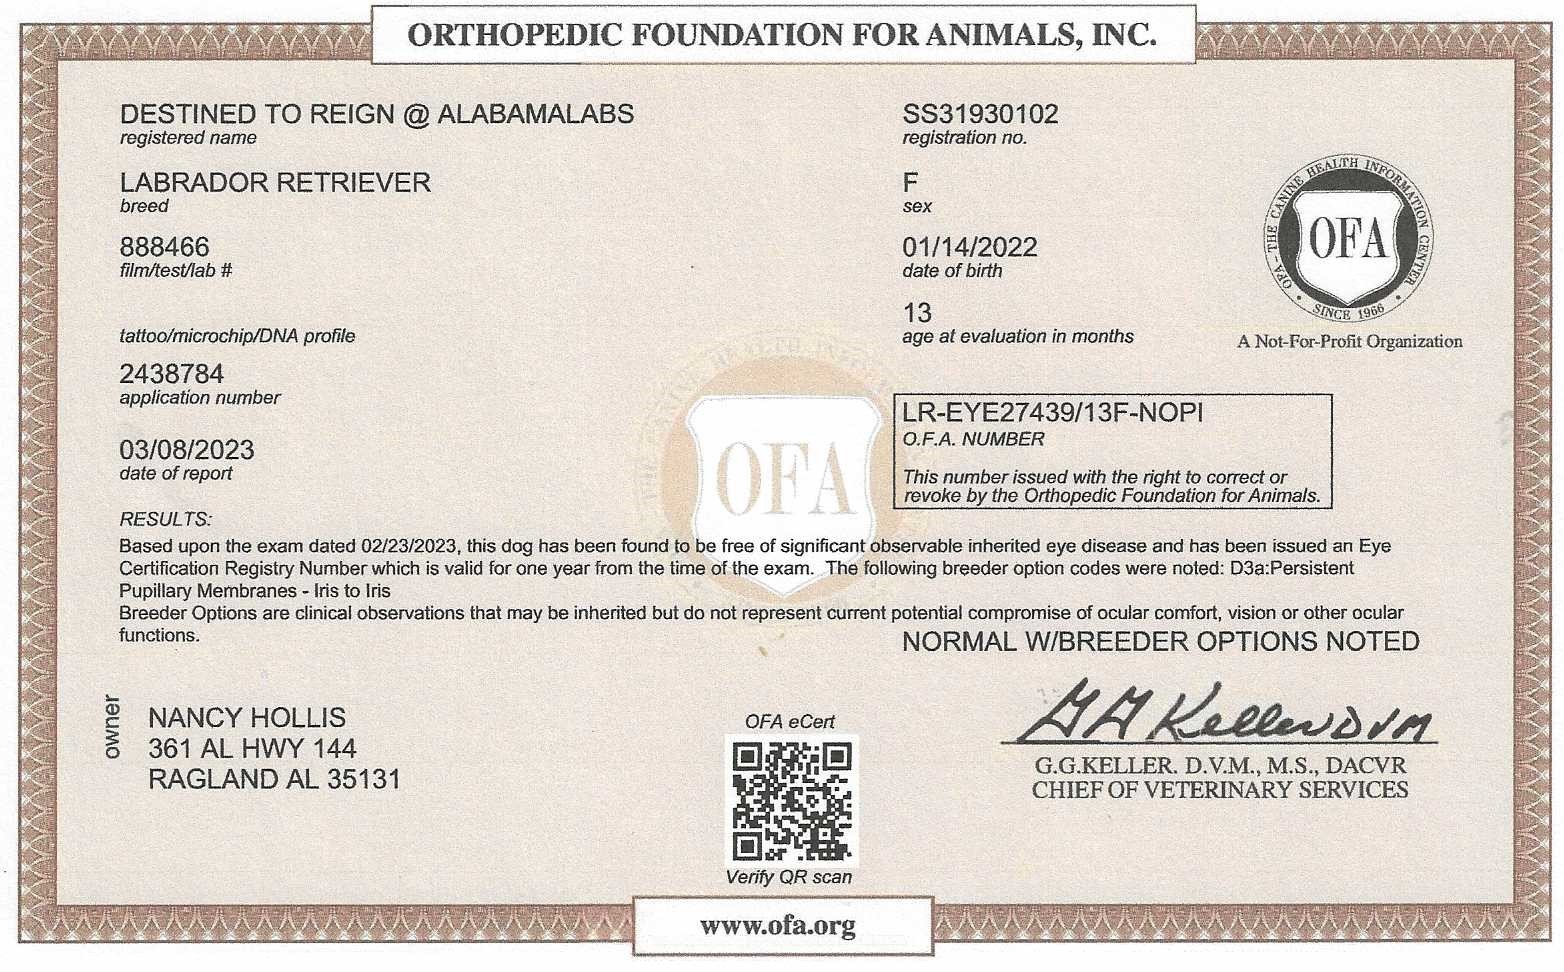 Destiny's OFA Eye Certification (2)